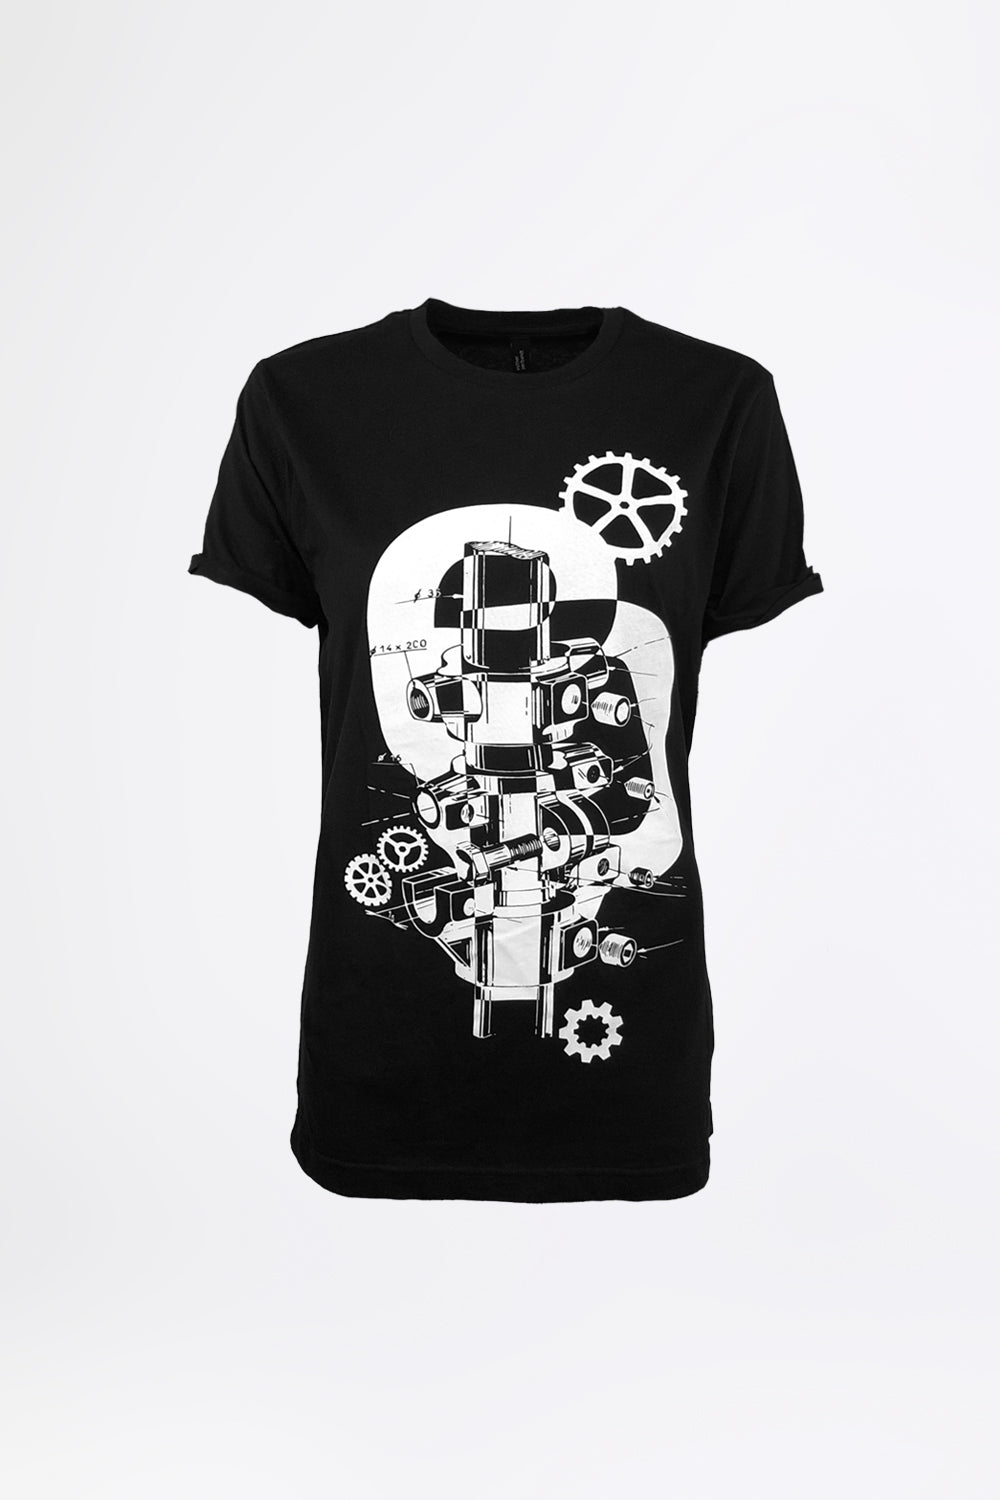 DREAM MACHINE - Black Statement T-Shirt